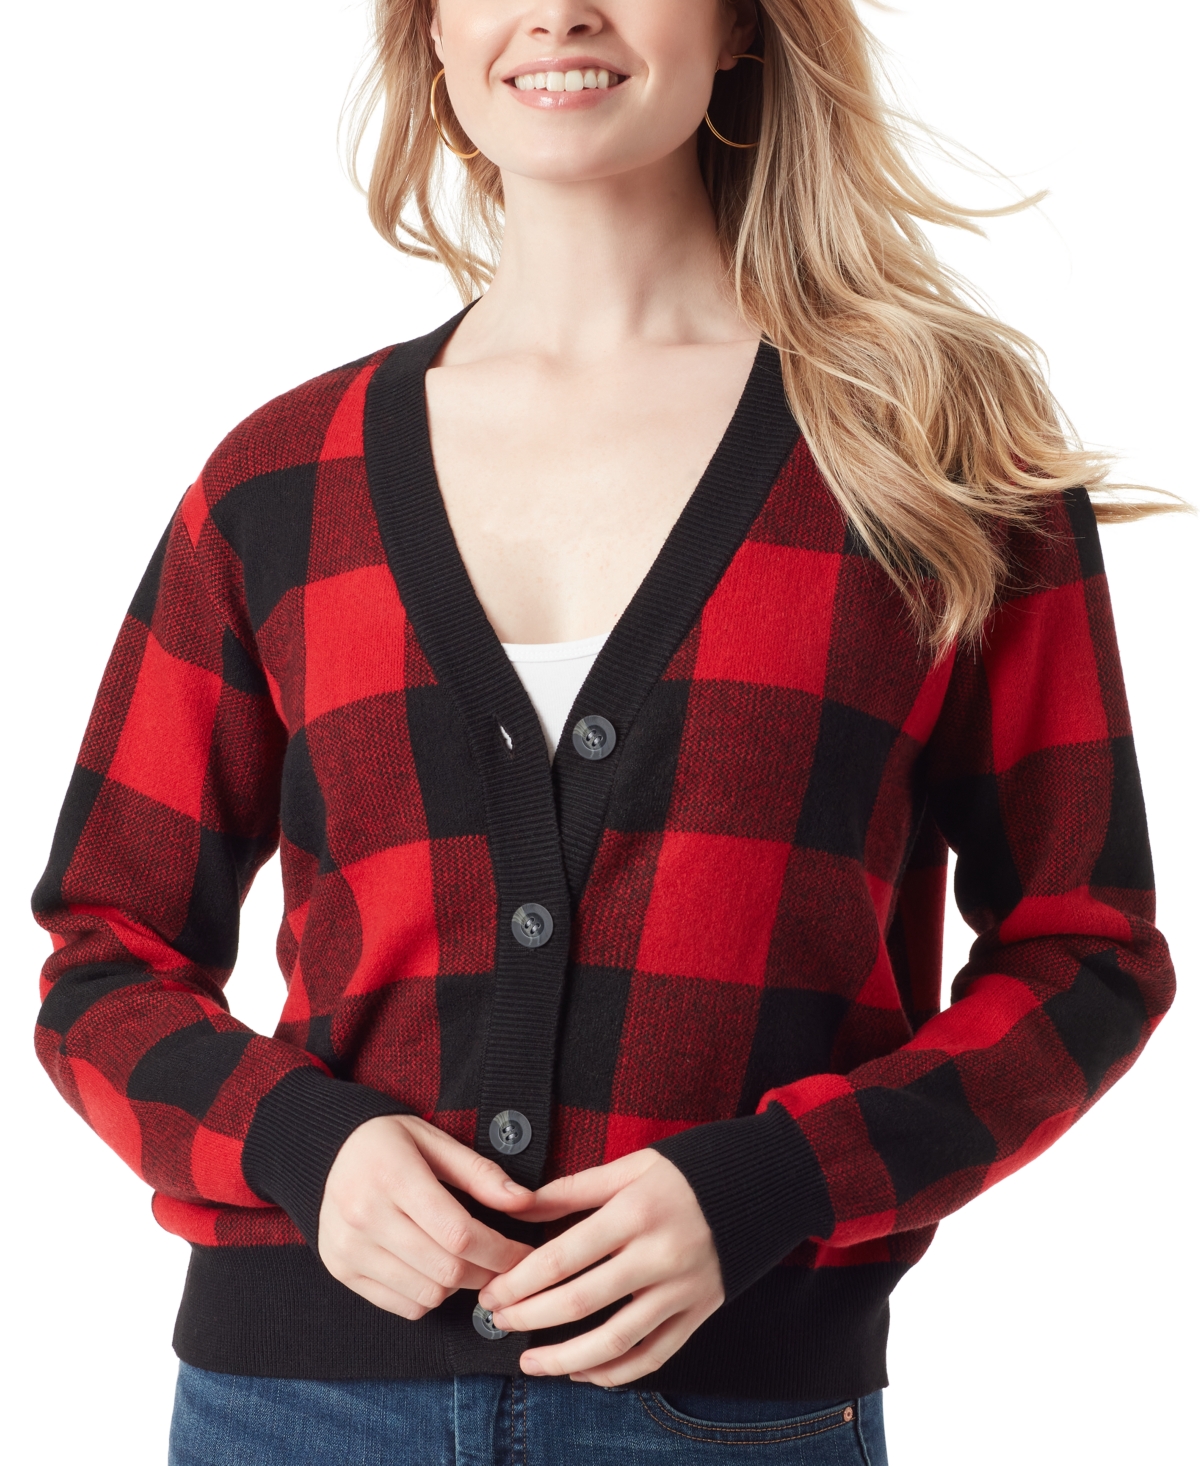 Jessica Simpson Women's Buffalo Plaid Jacquard Button-front Cardigan Sweater In Claret Red-buffalo Check